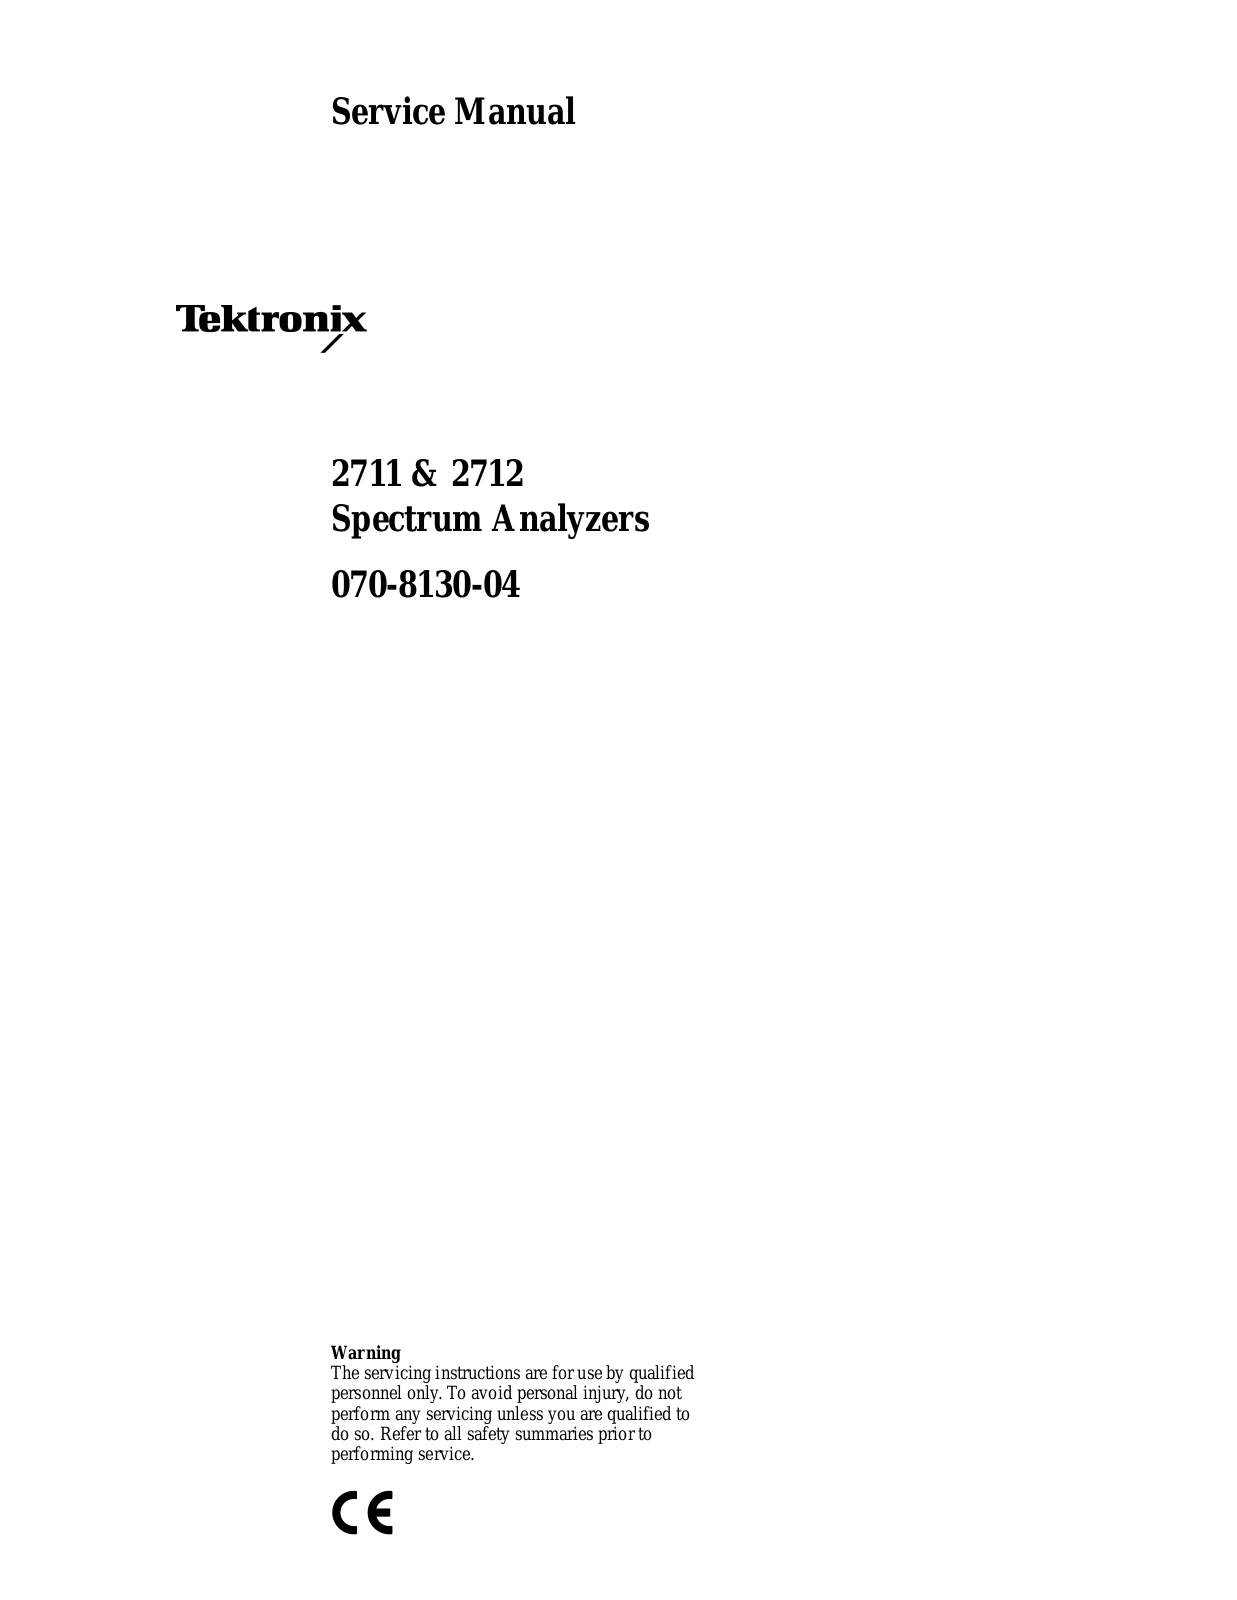 Tektronix 2712, 2711 Service Manual